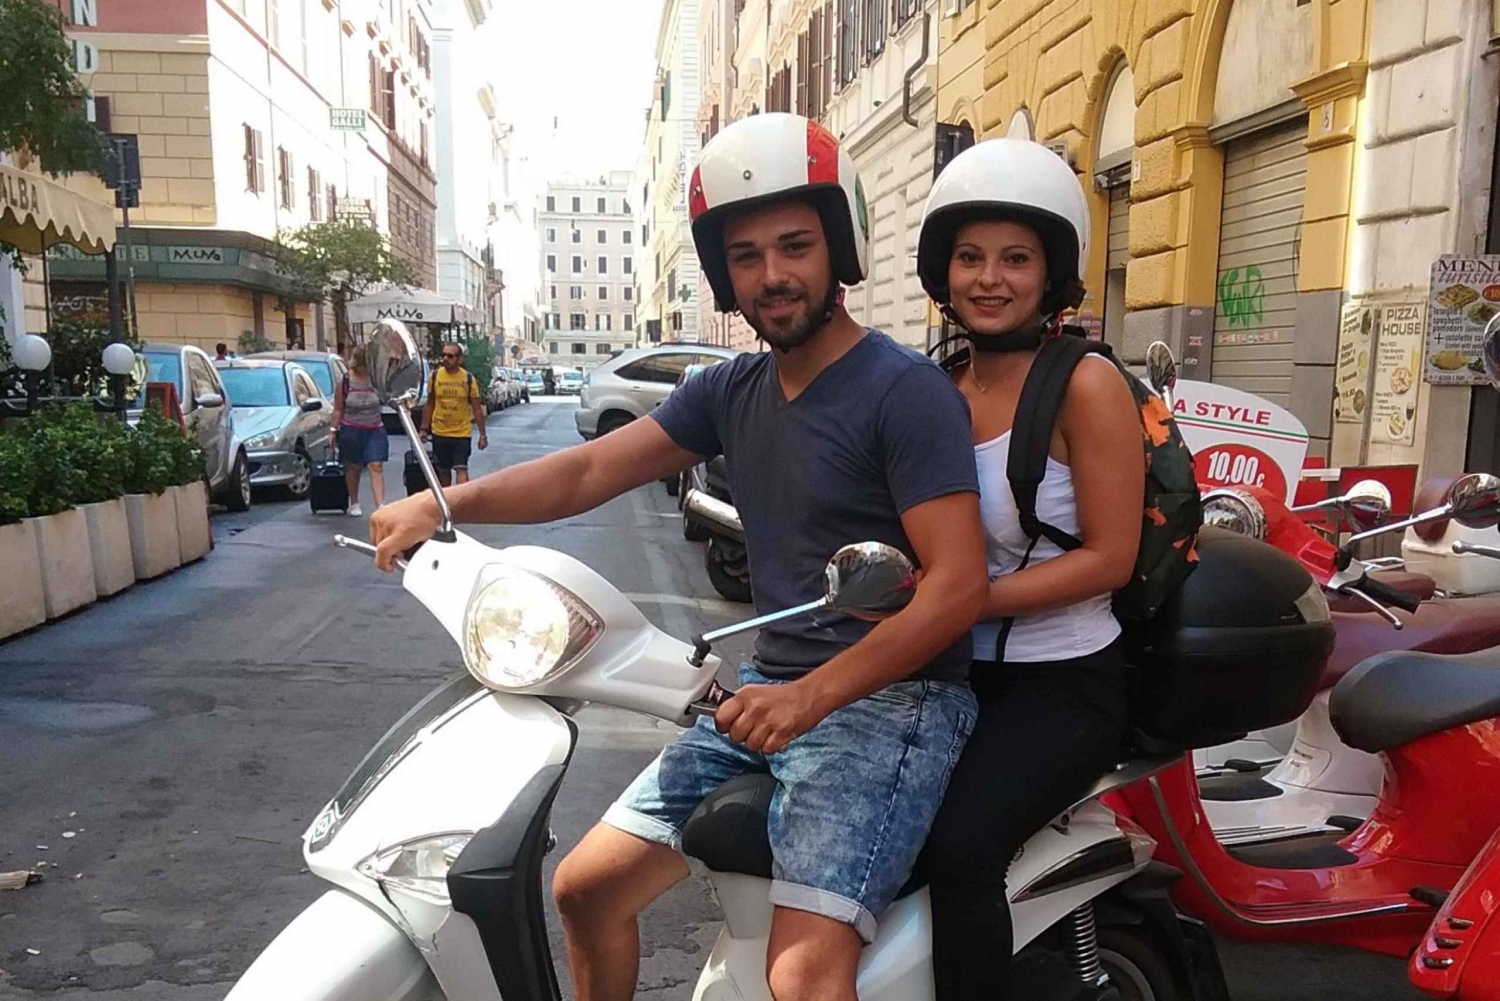 Rome: New Liberty 125cc Scooter Rental (1-7 Days)